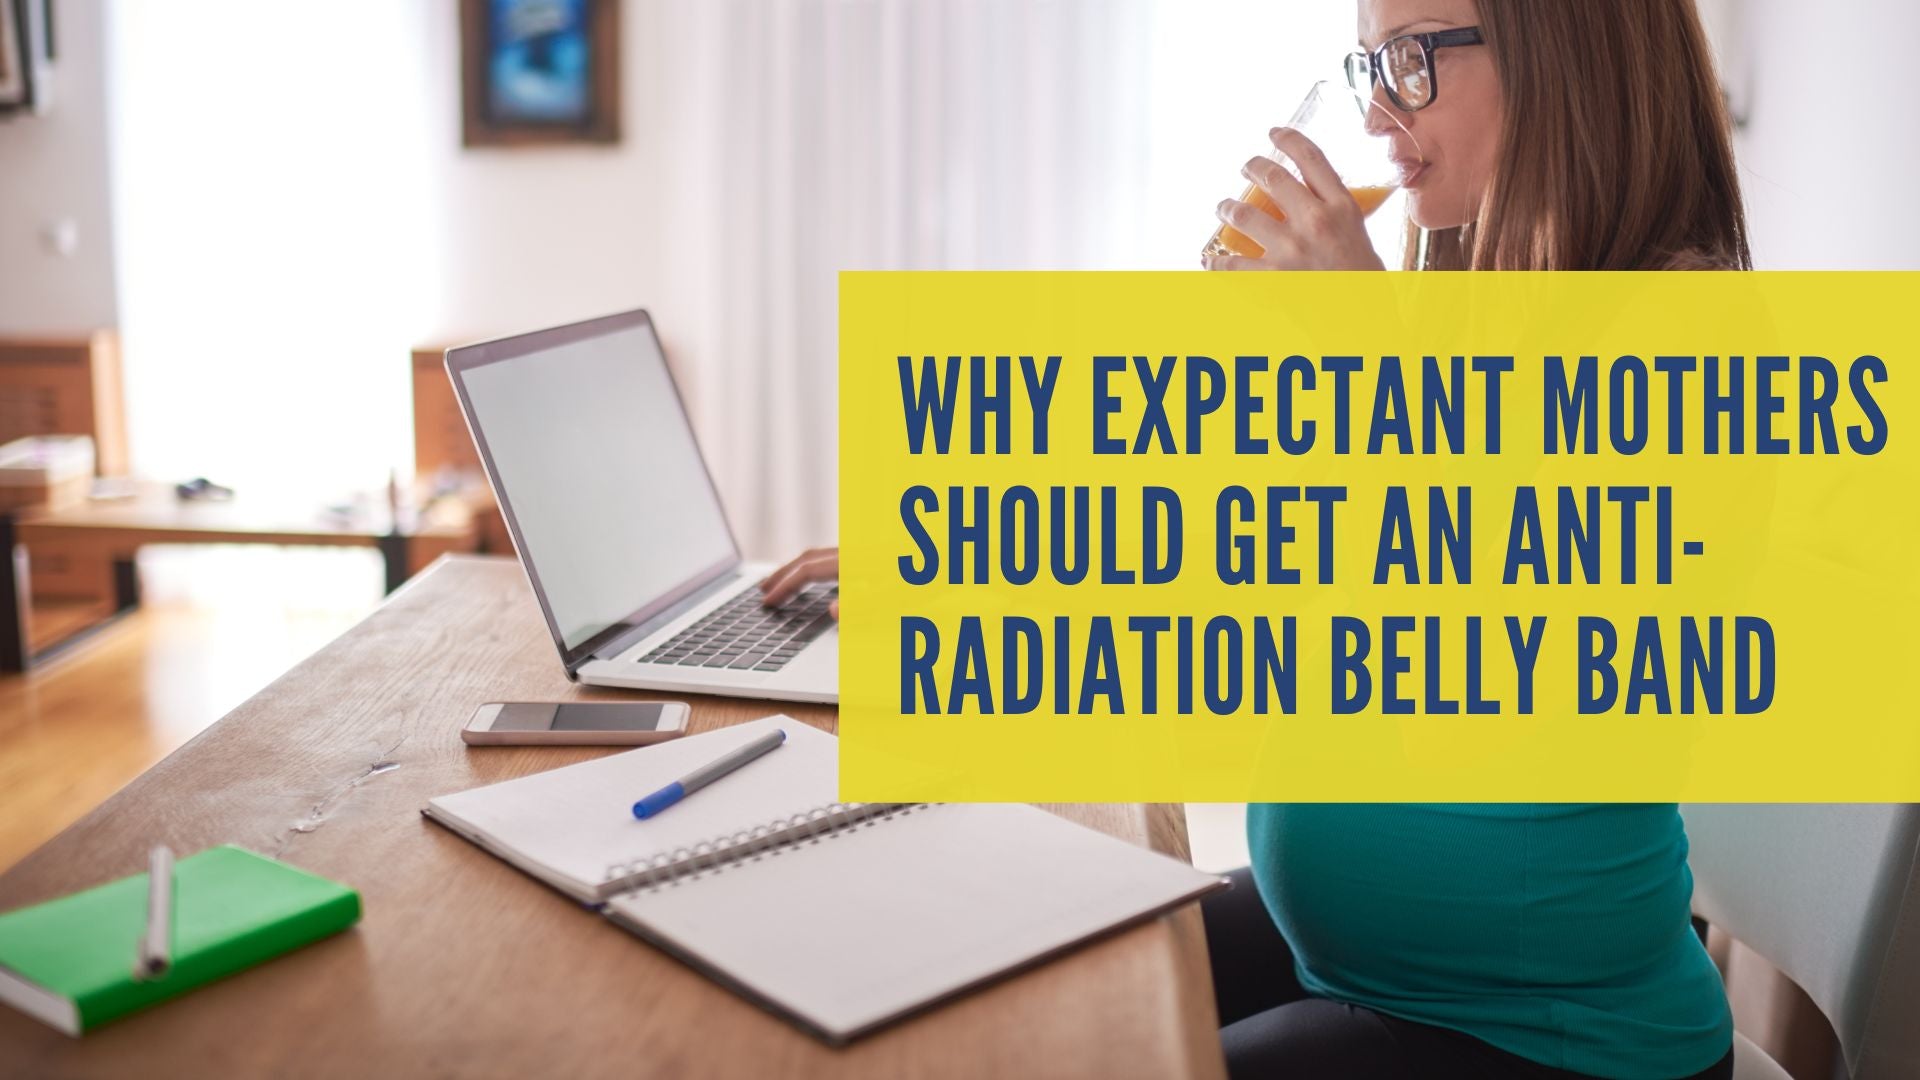 Anti-radiation maternity clothes bellyband apron wear radiation